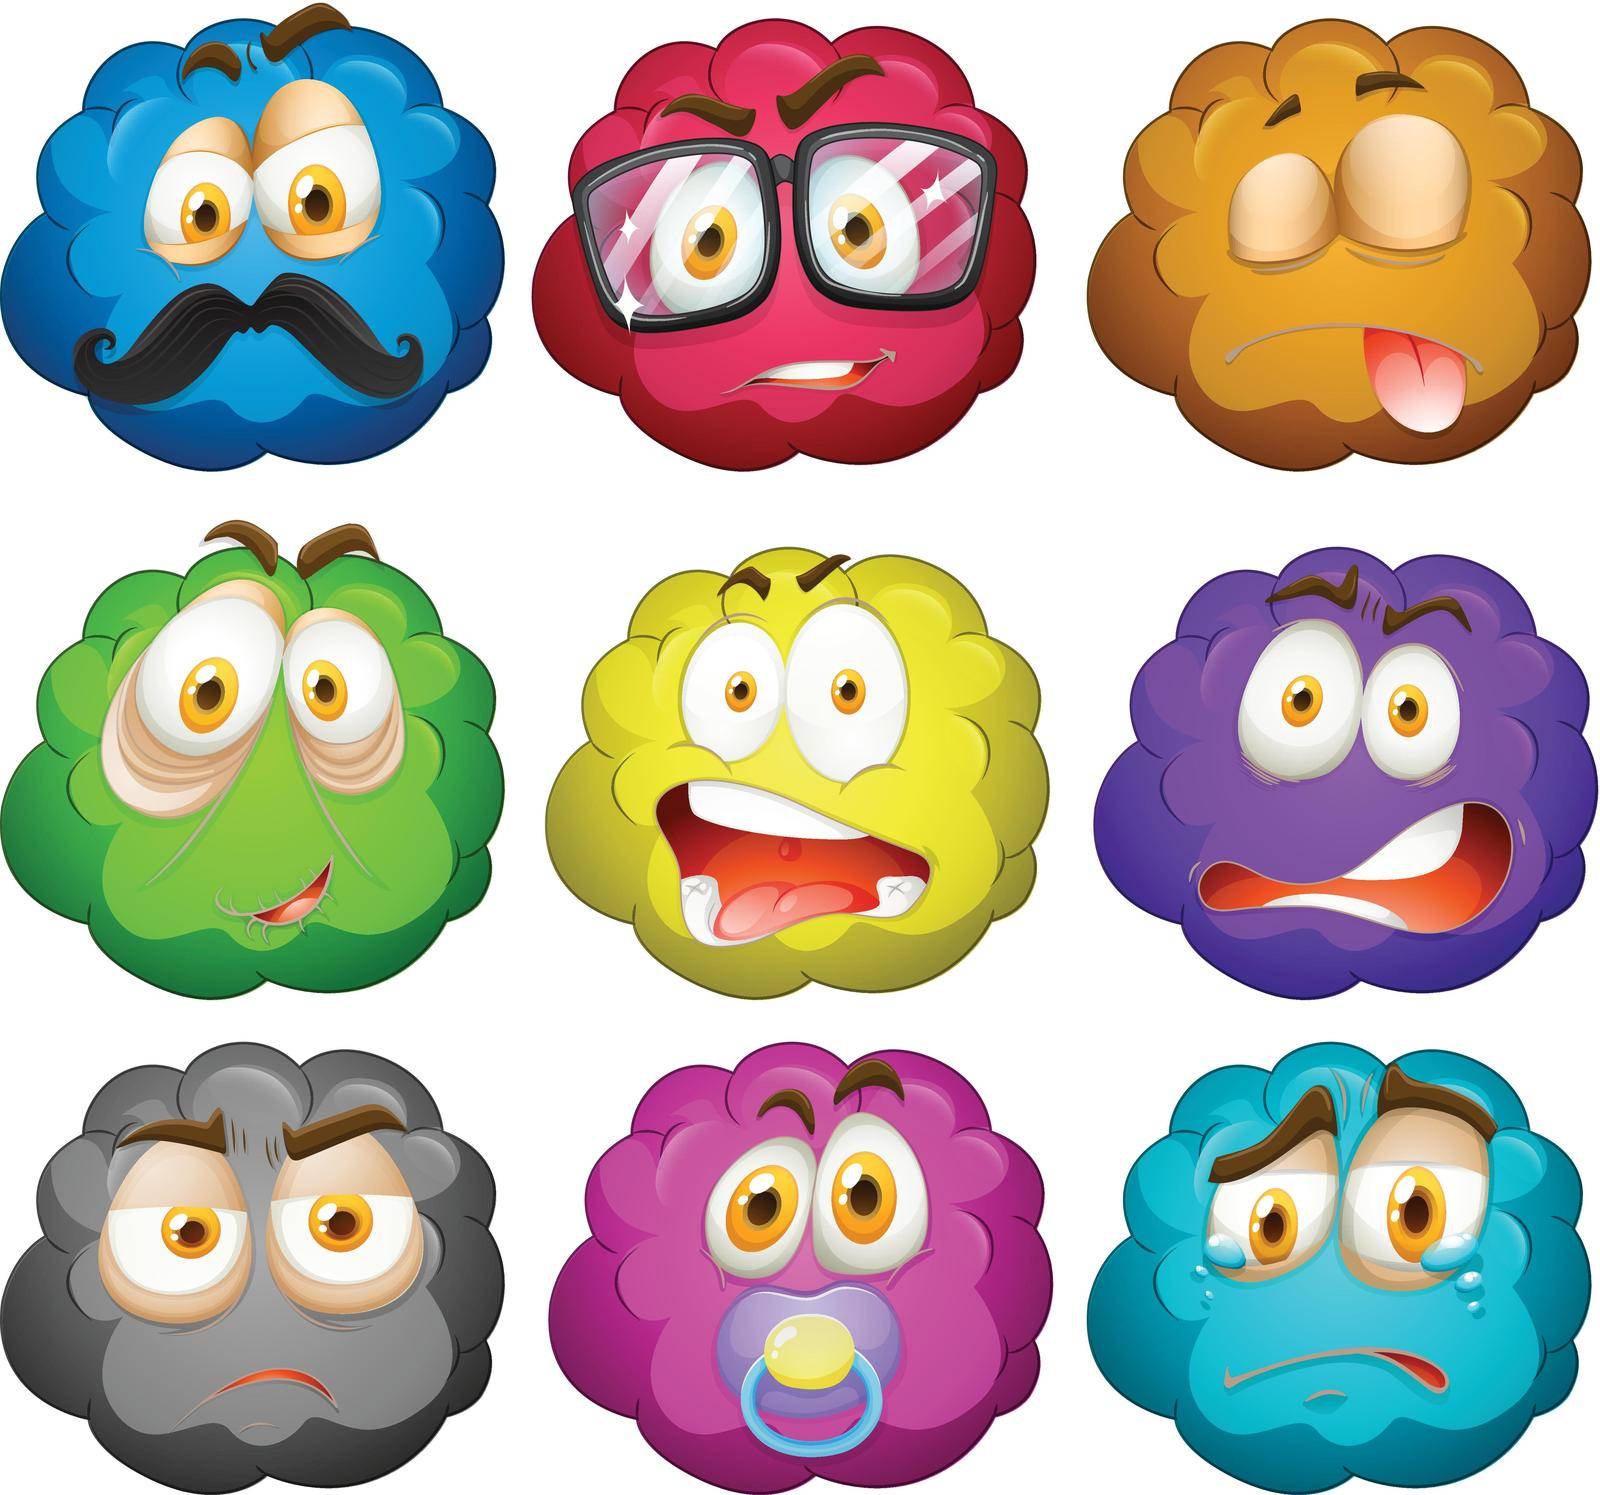 Facial expressions on fluffy balls illustration